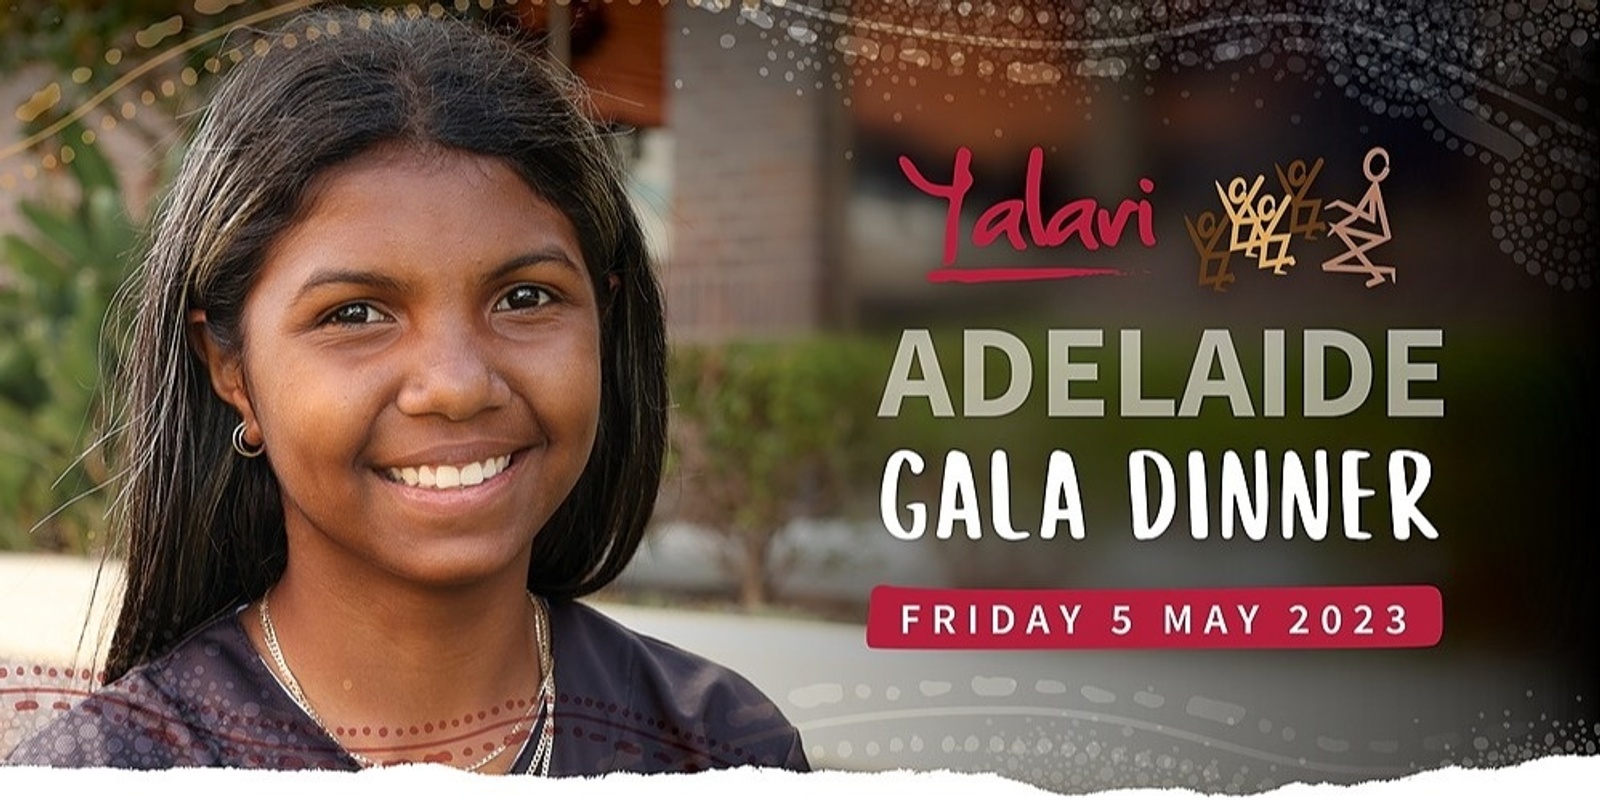 Banner image for 2023 Yalari Adelaide Gala Dinner